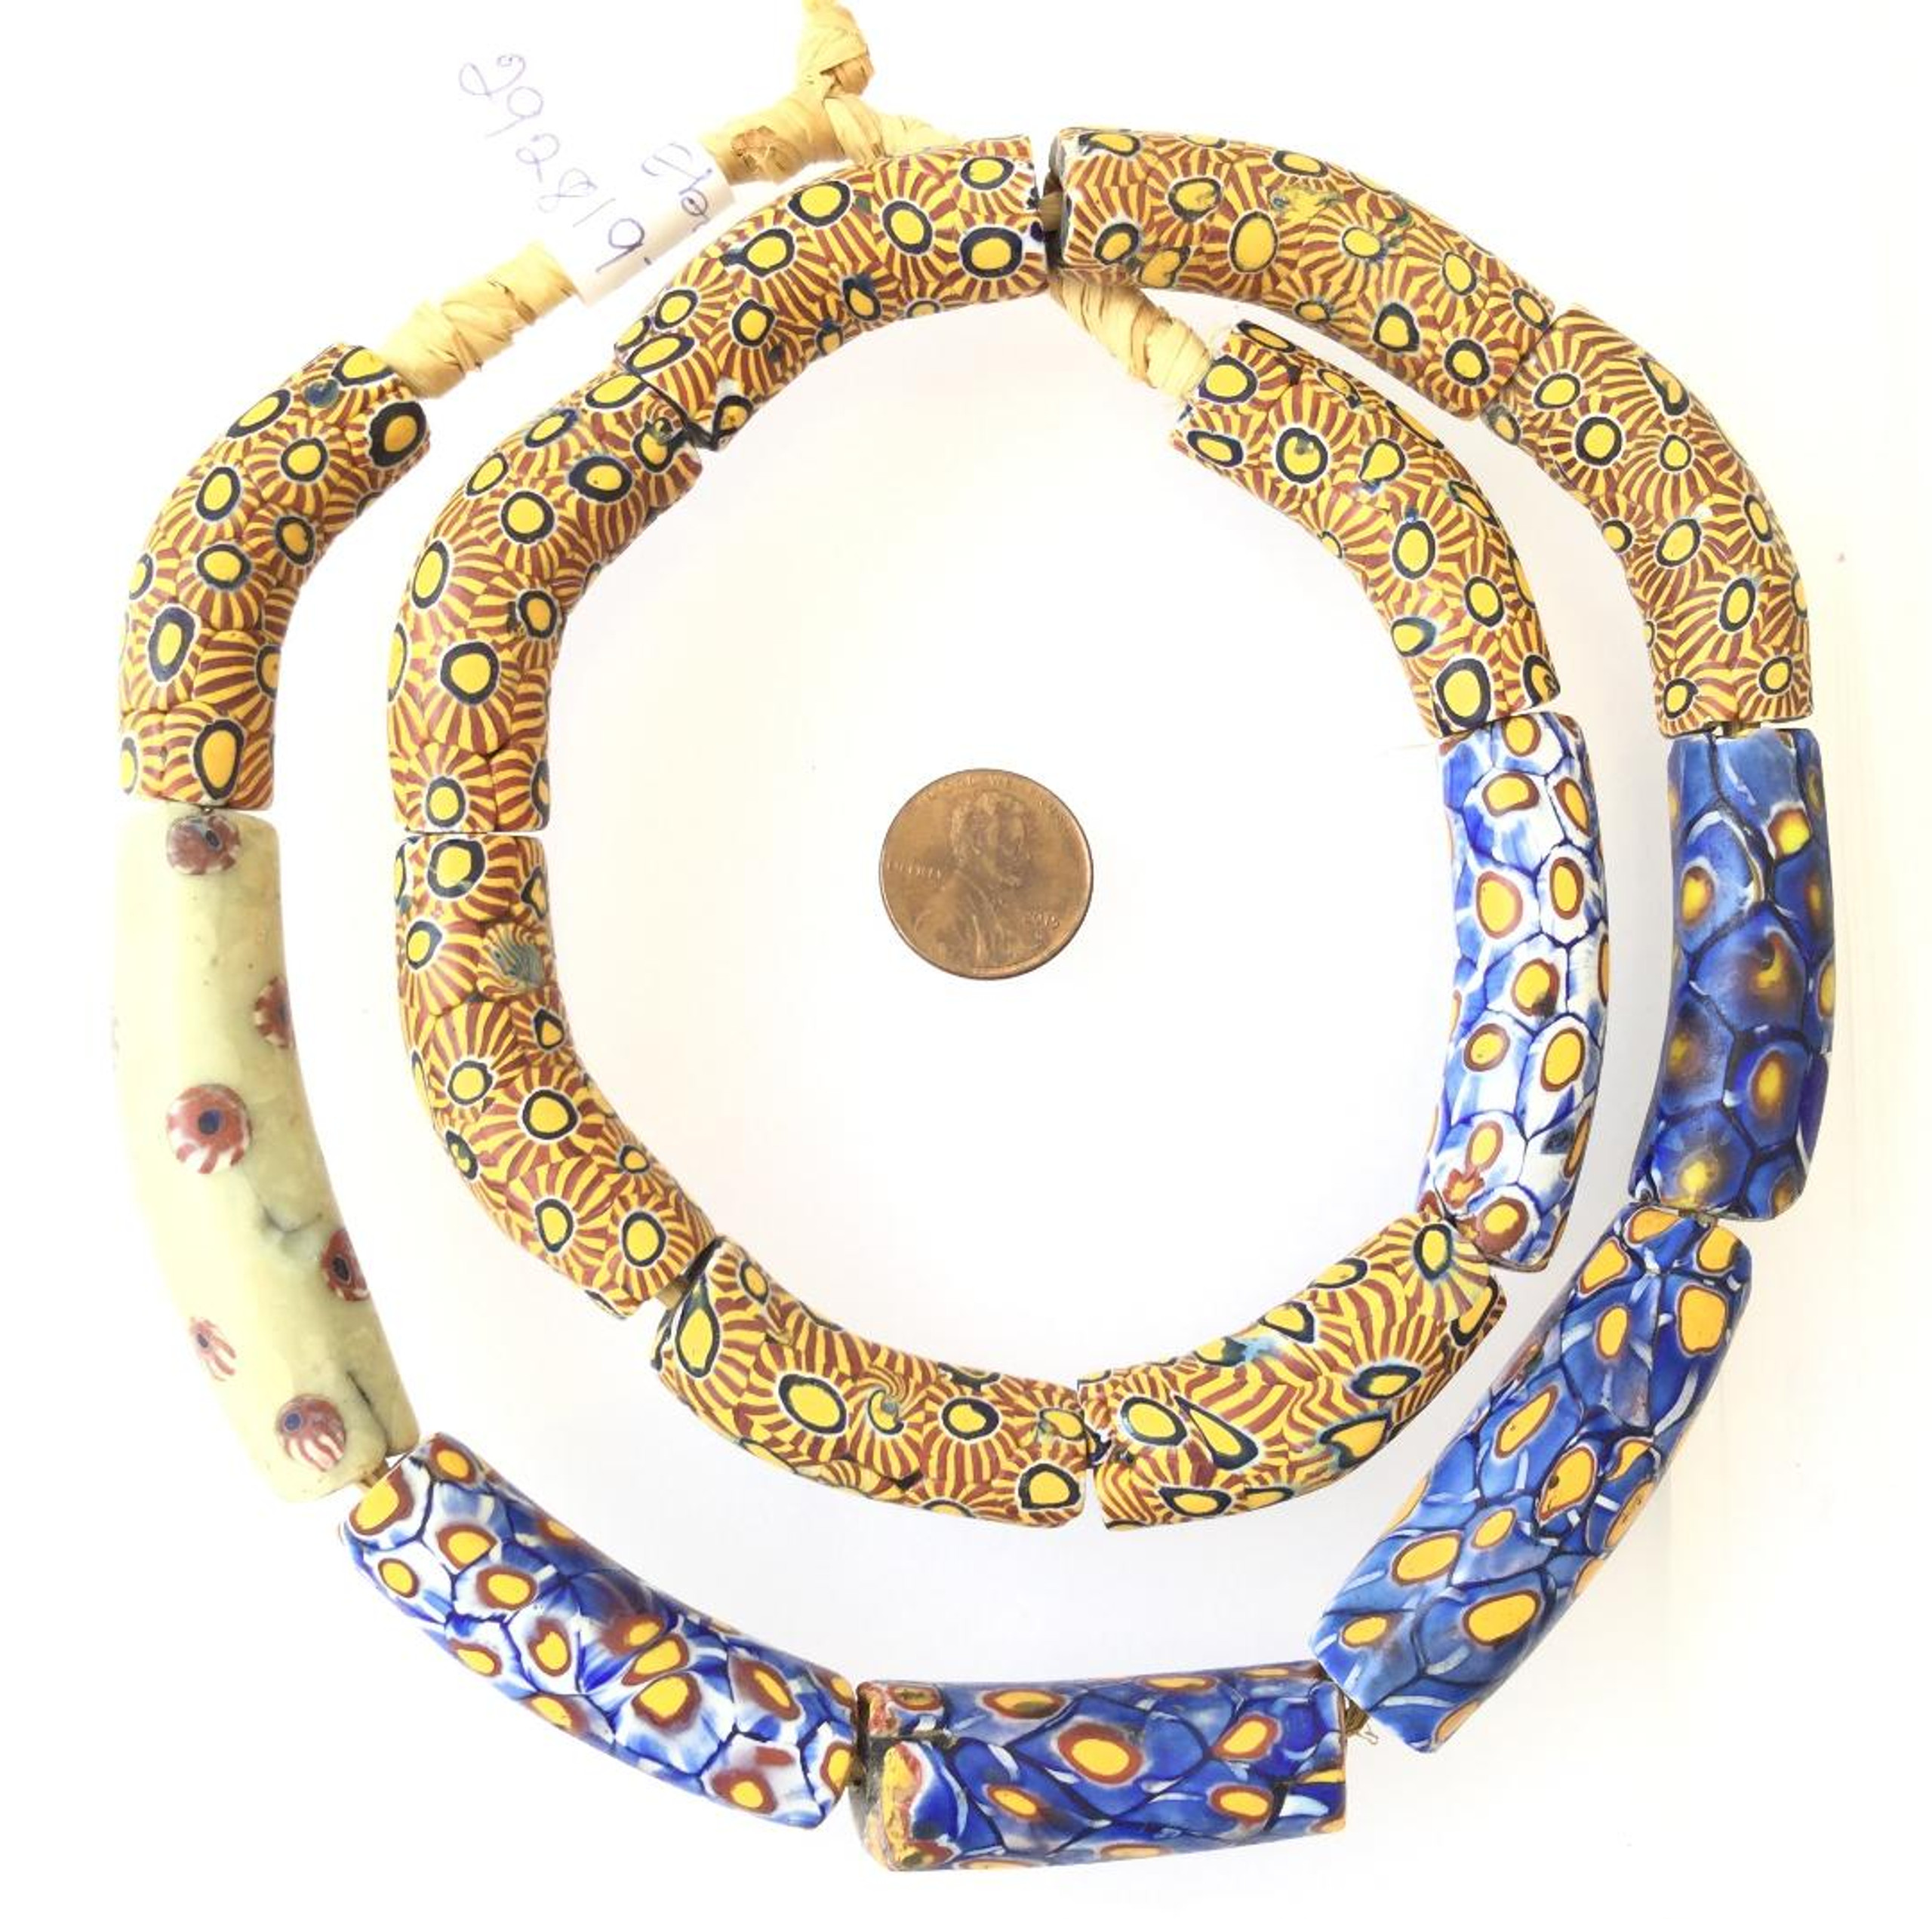 Mixed Elbows Old Rare Antique Venetian Millefiori glass African trade beads